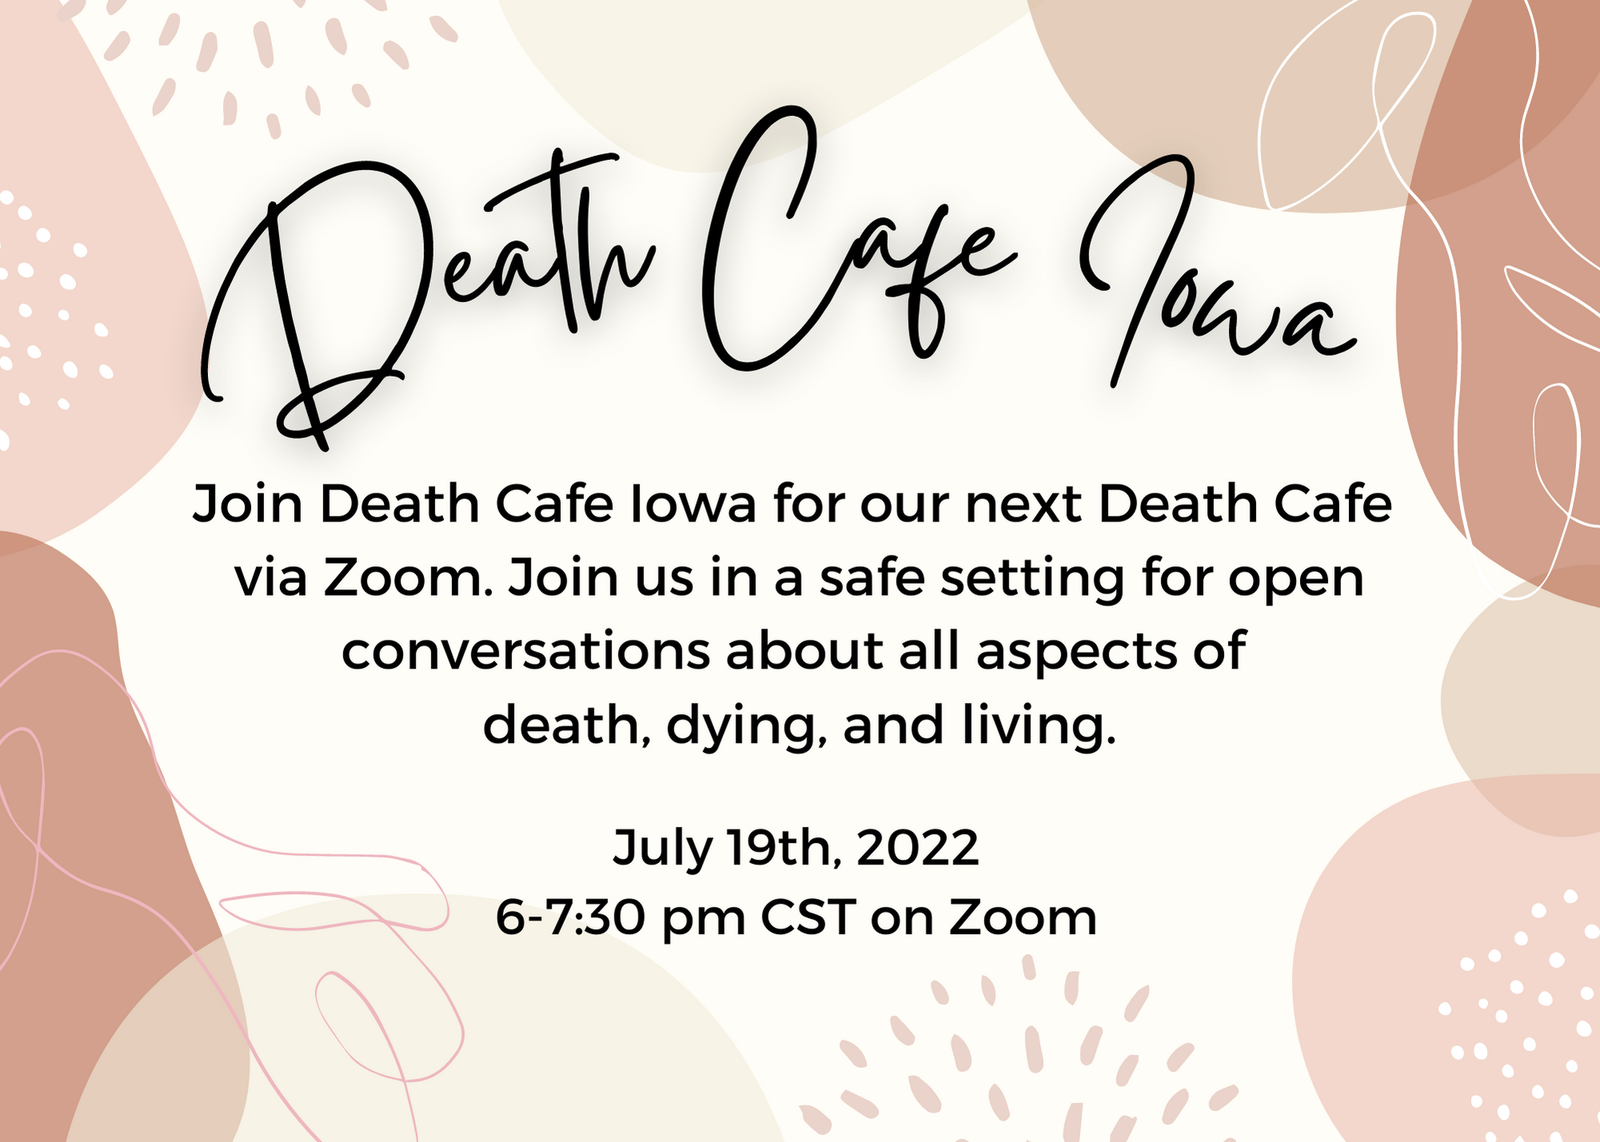 July Online Death Cafe CDT